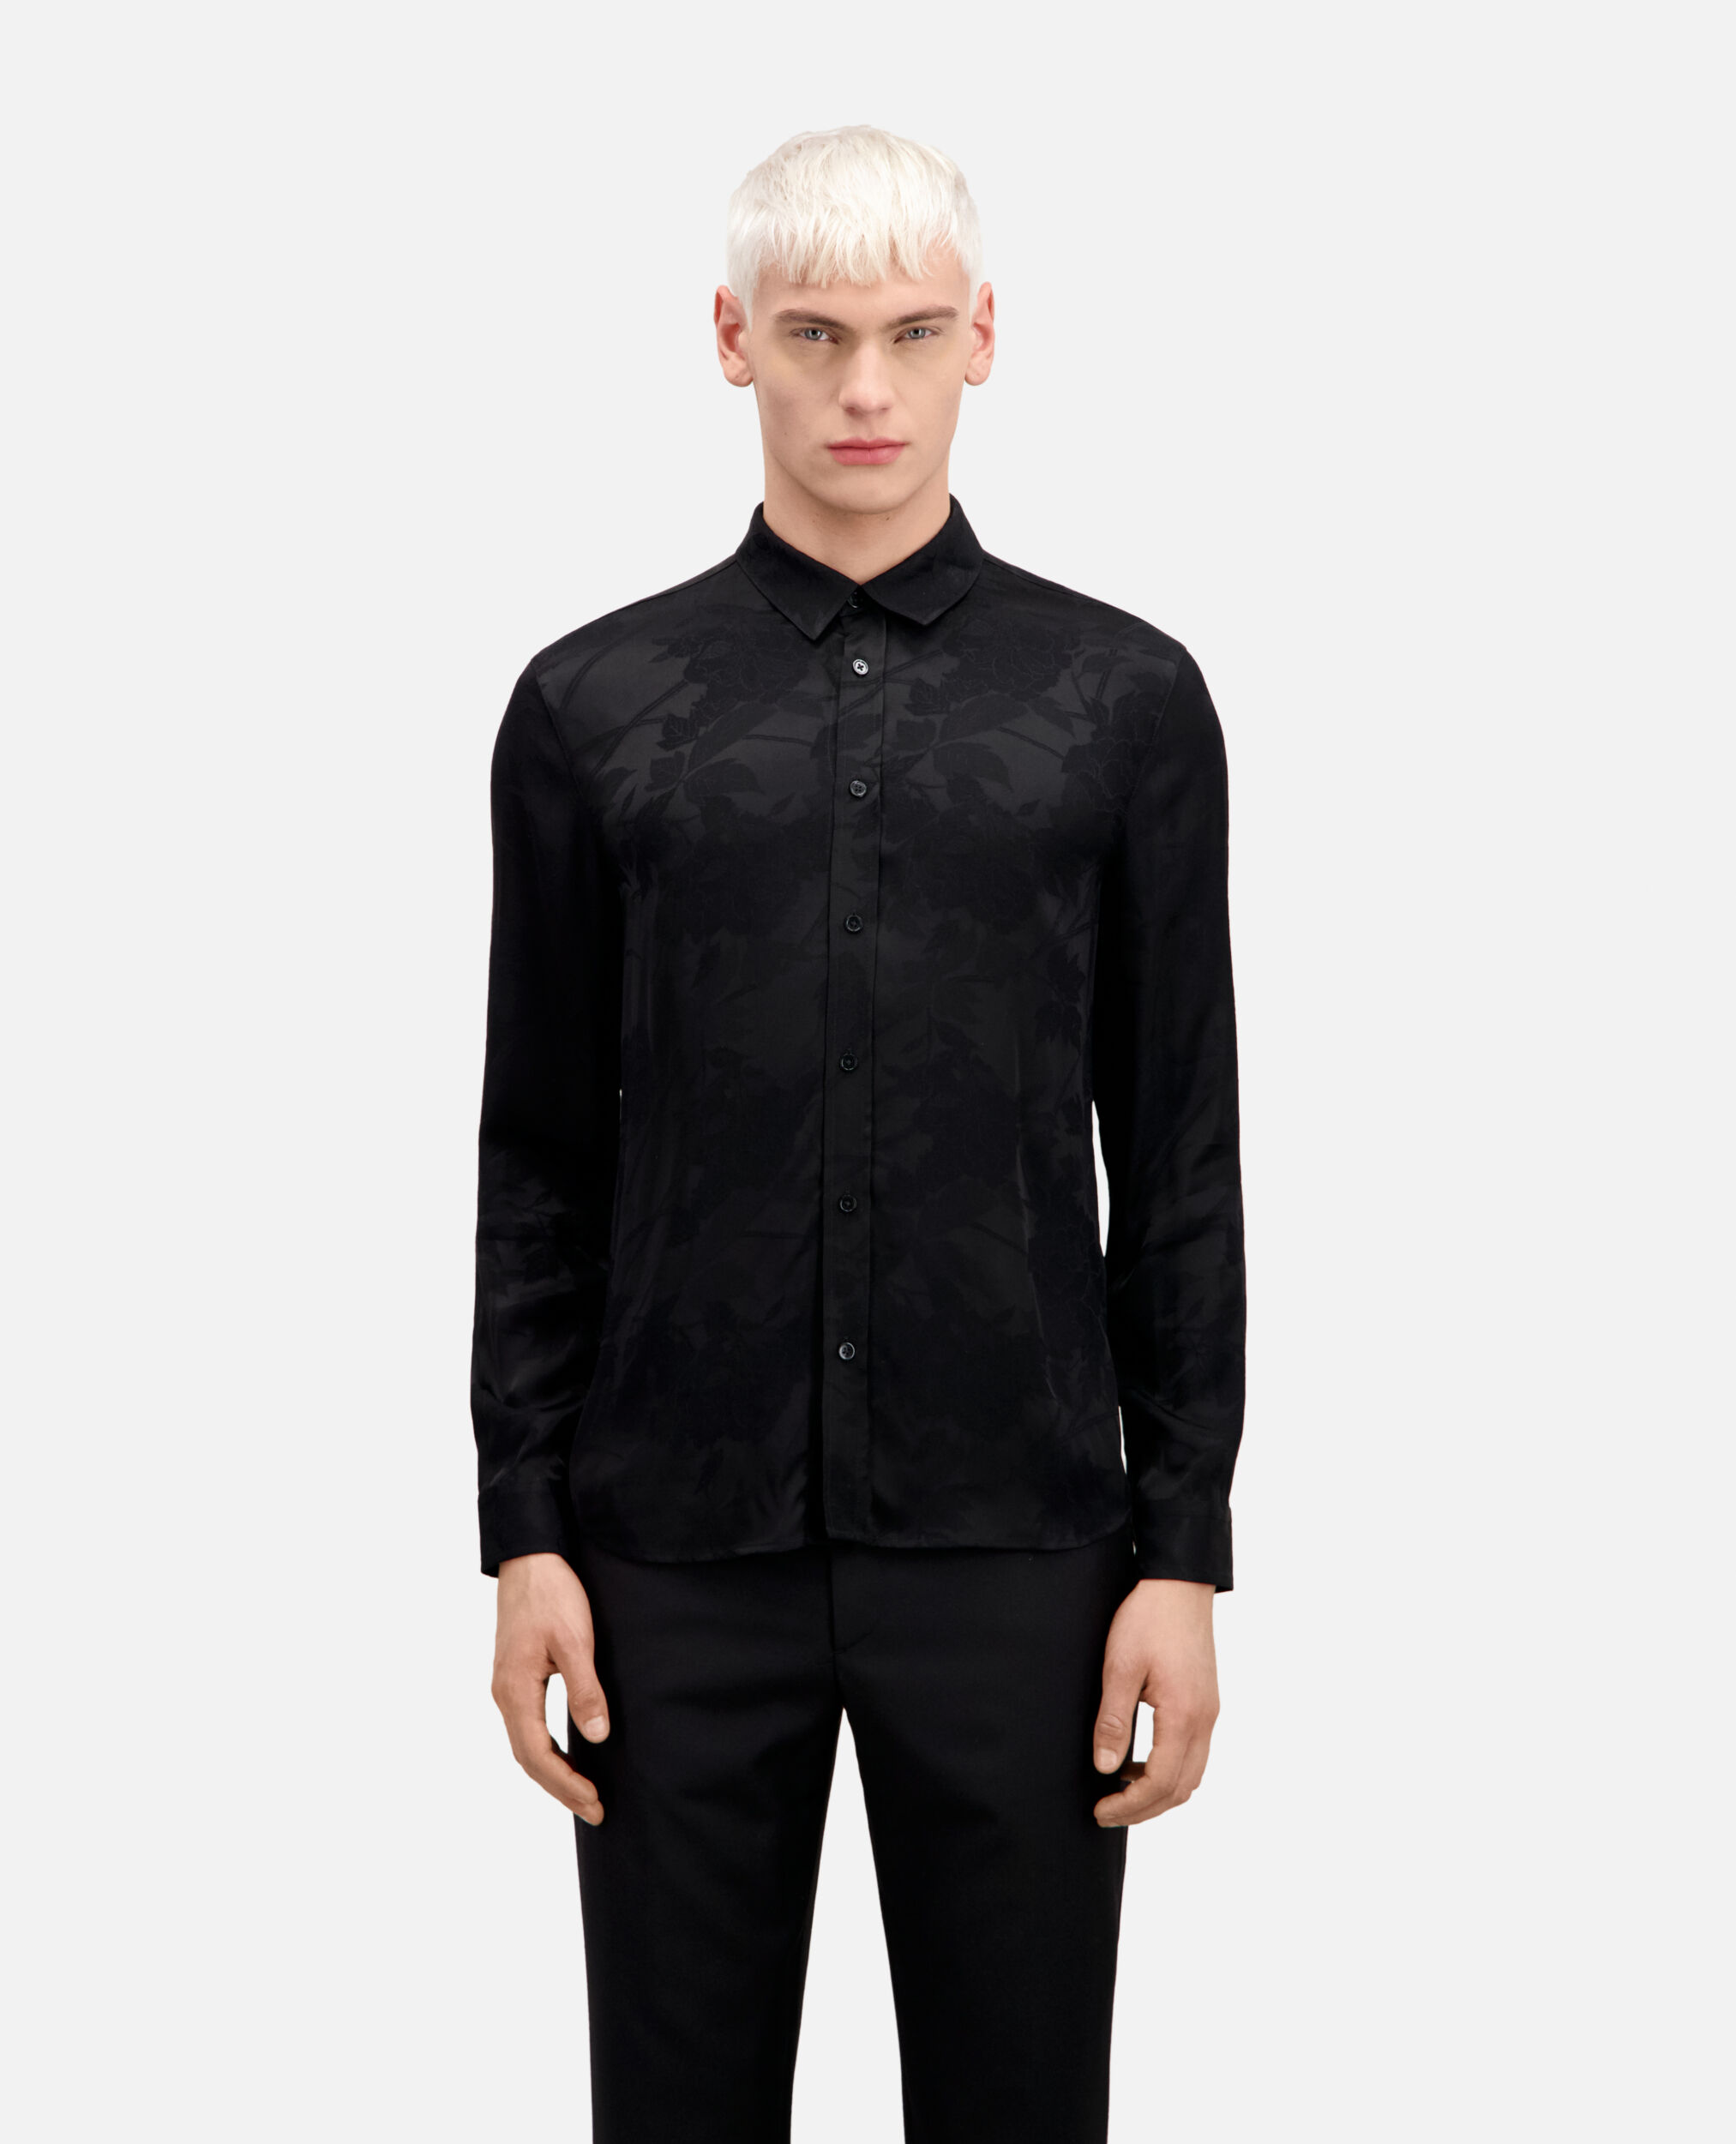 Camisa jacquard negra flores, BLACK, hi-res image number null